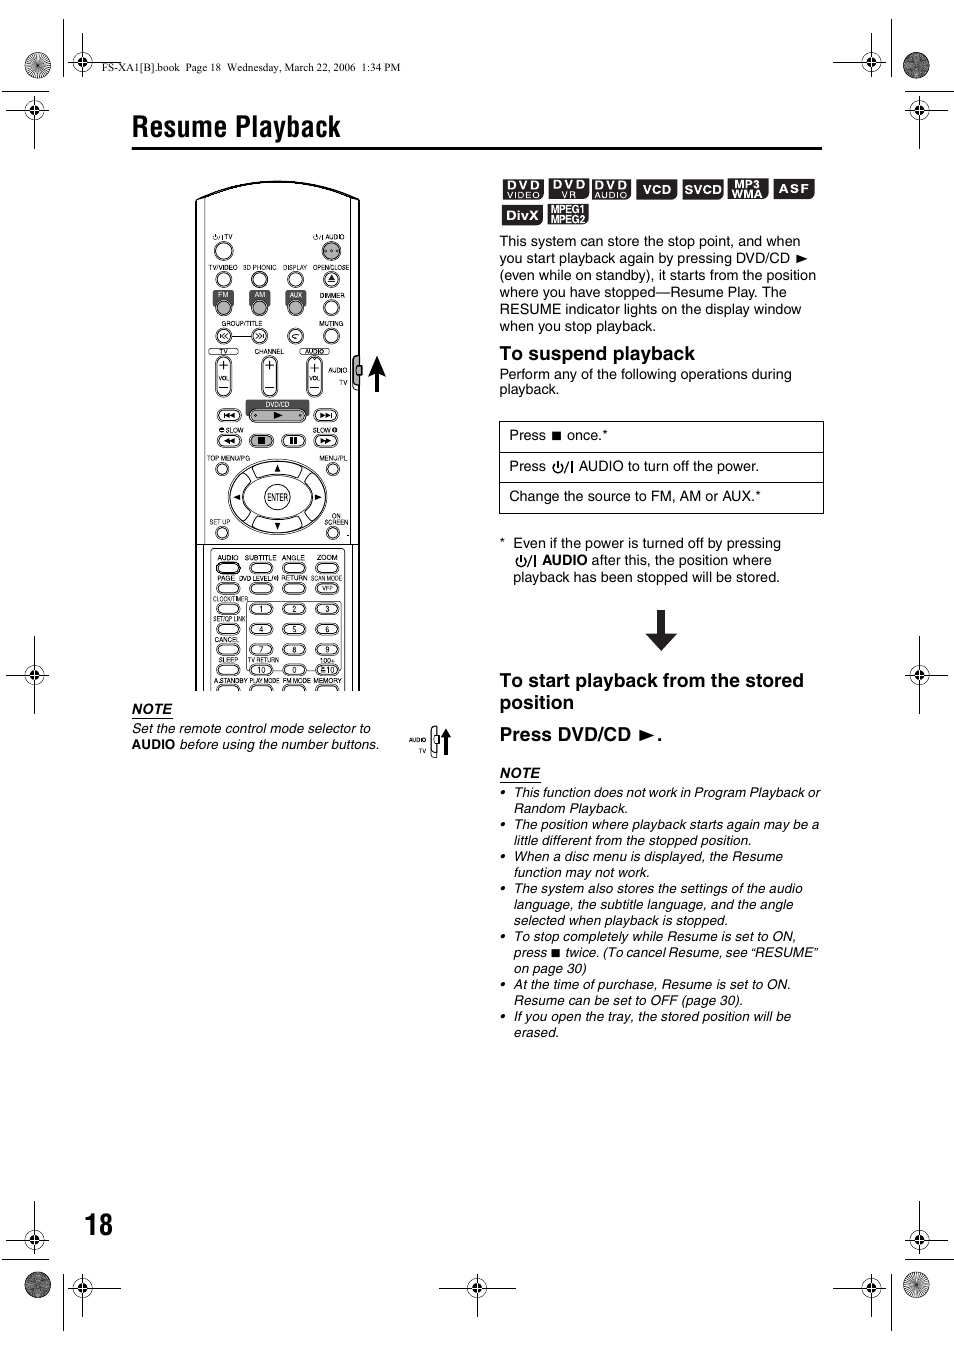 Resume Playback Jvc Ca Fsxa1 User Manual Page 22 48